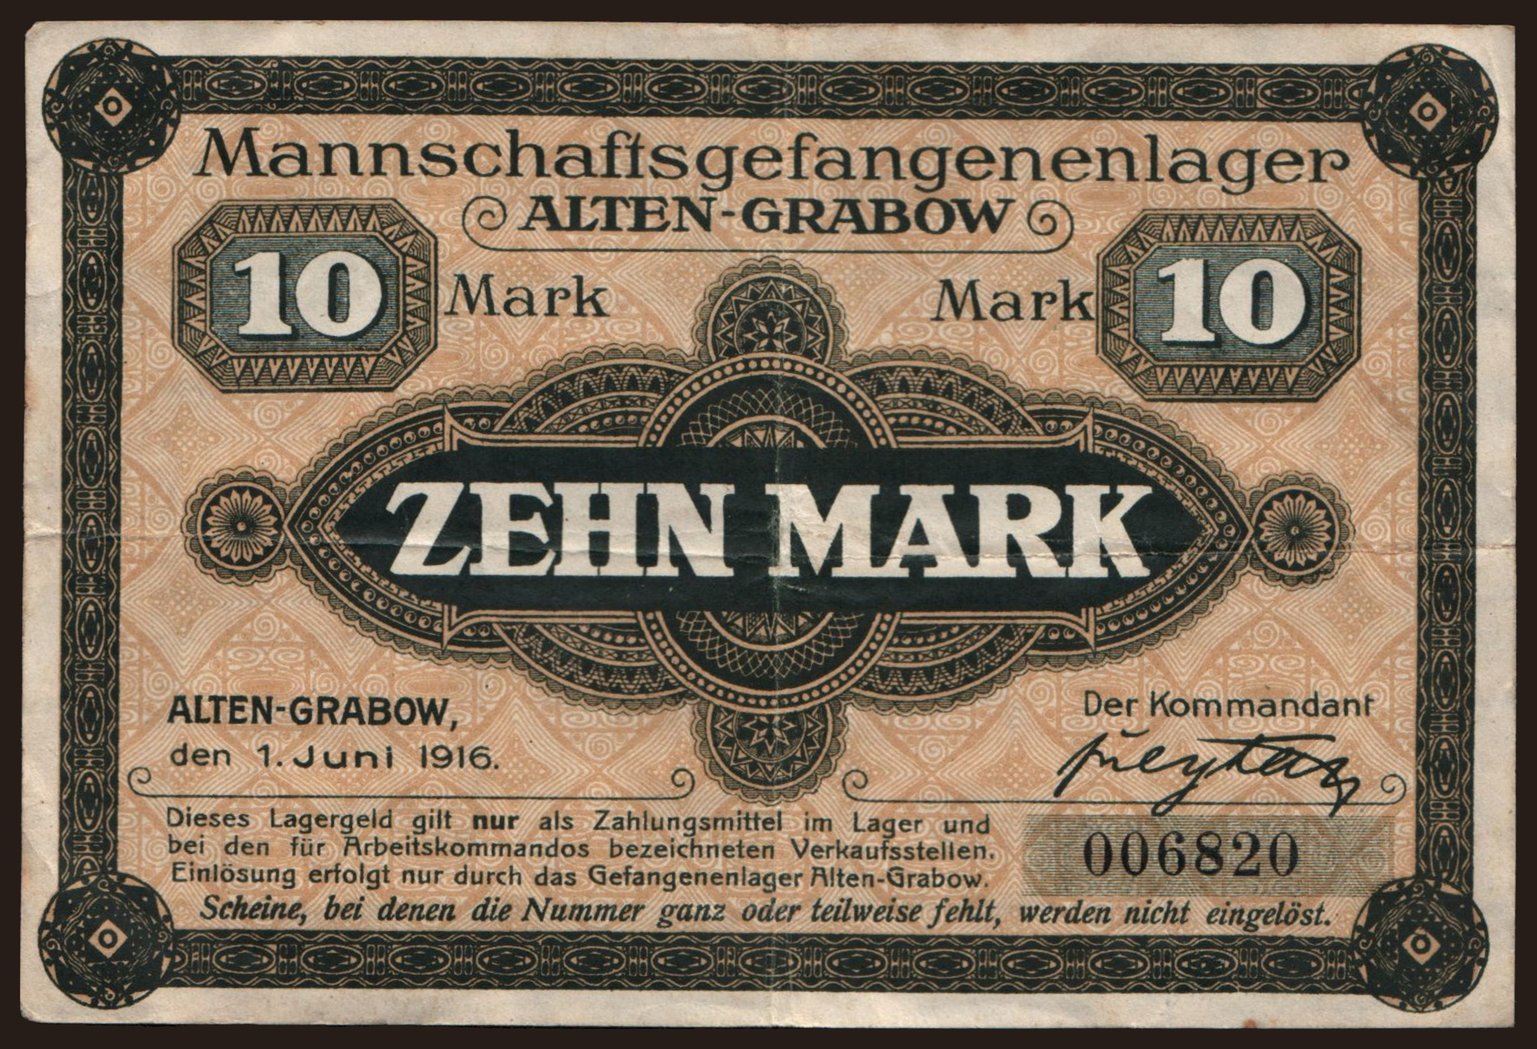 Alten-Grabow, 10 Mark, 1916